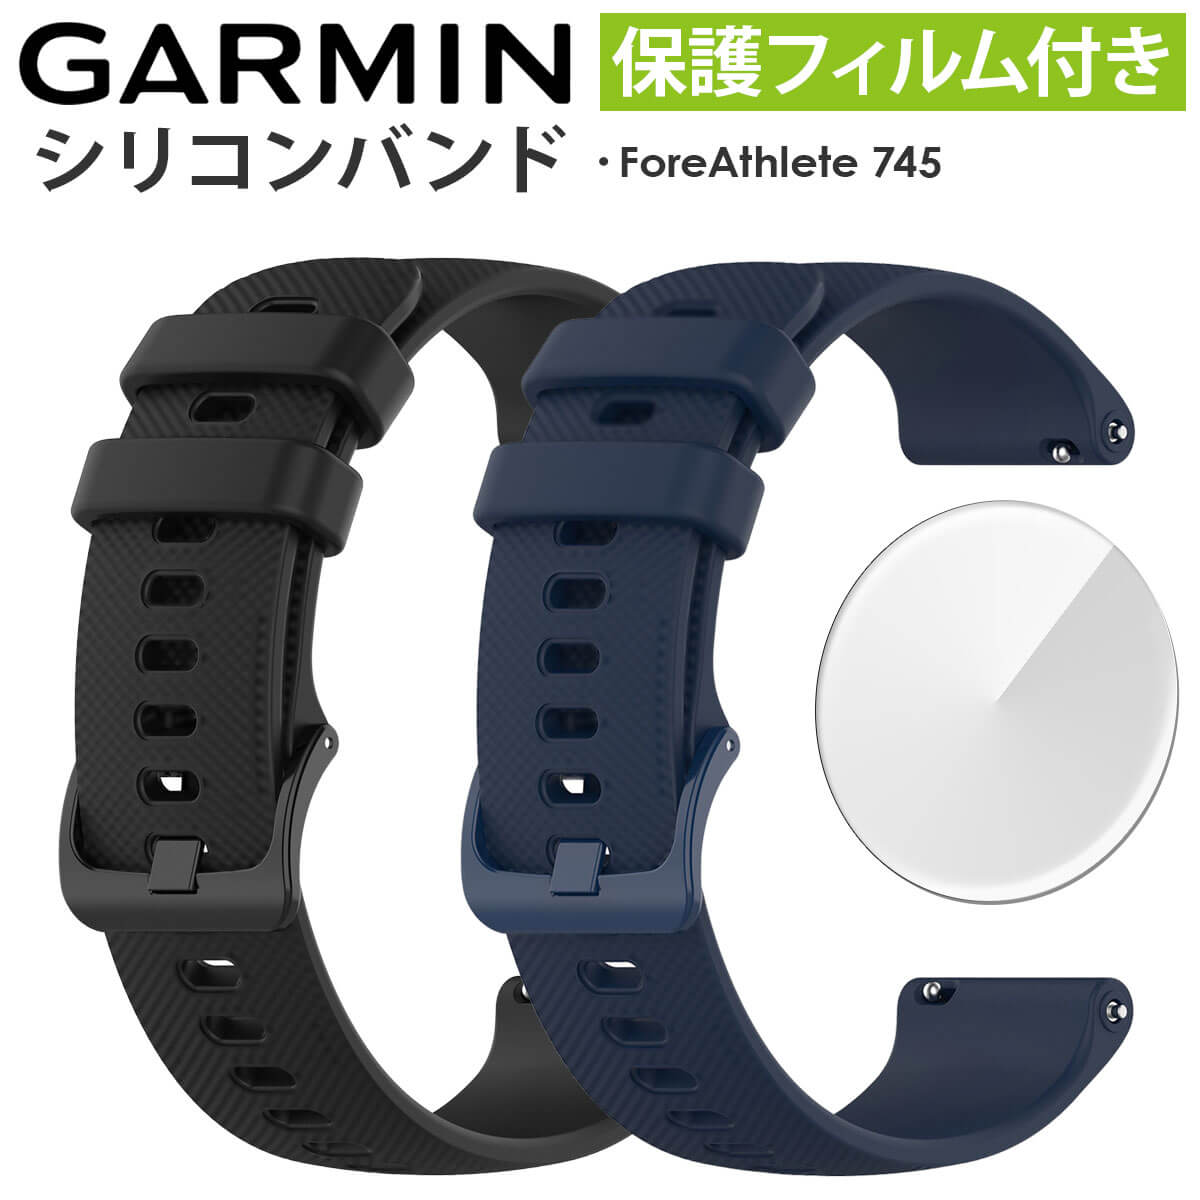 GARMIN ForeAthlete 745 交換 ベルト シリコン garmin foreathlete ...